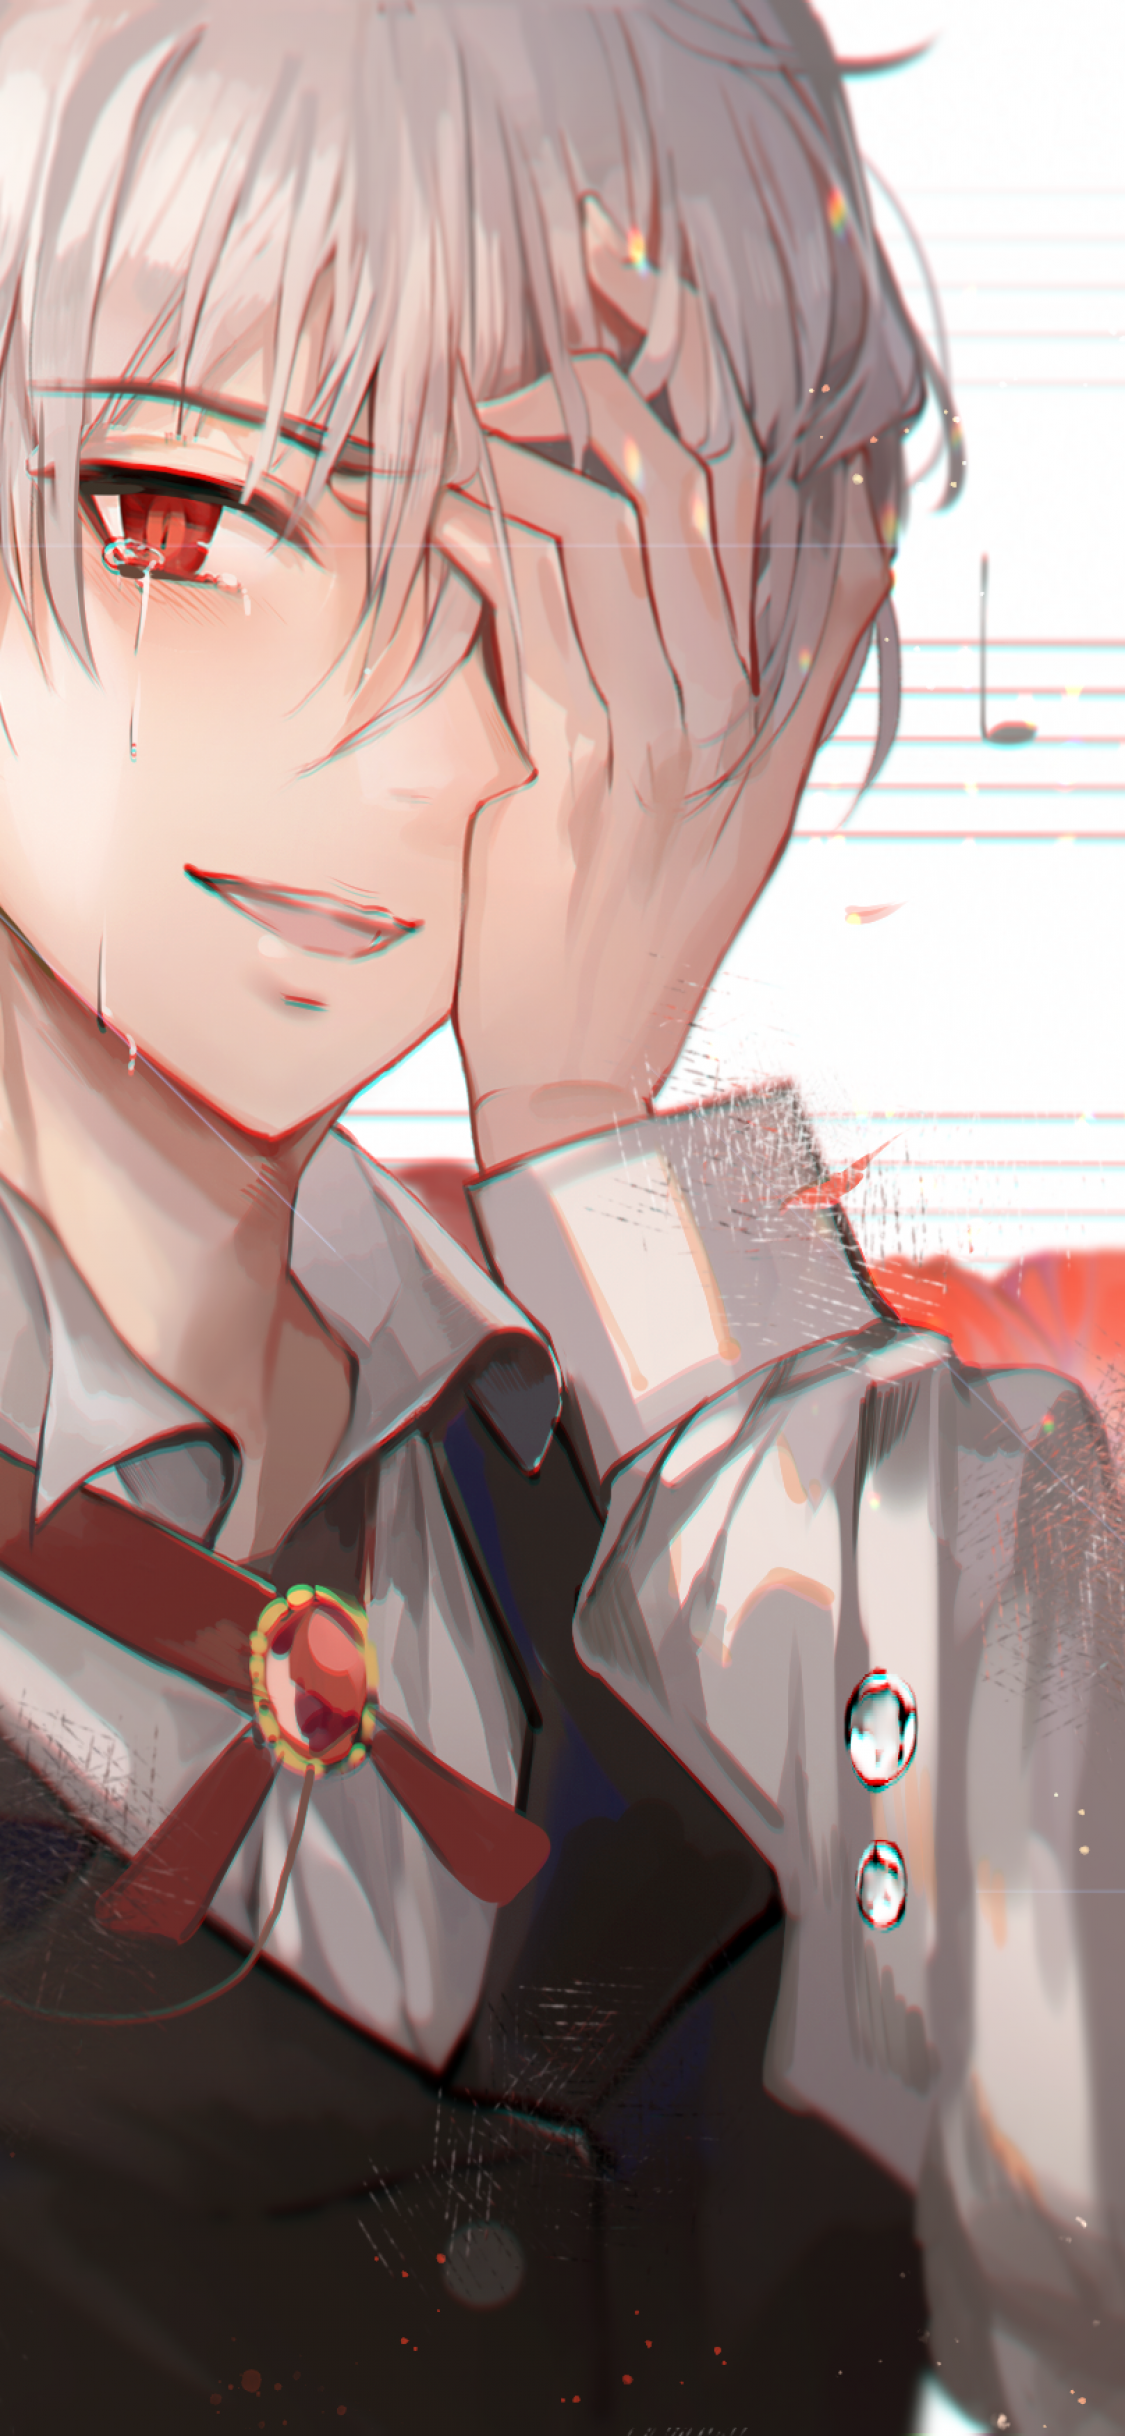 Cool anime discord avatar for boys white hair Scarlet red Eyes small smile  holding a scythe